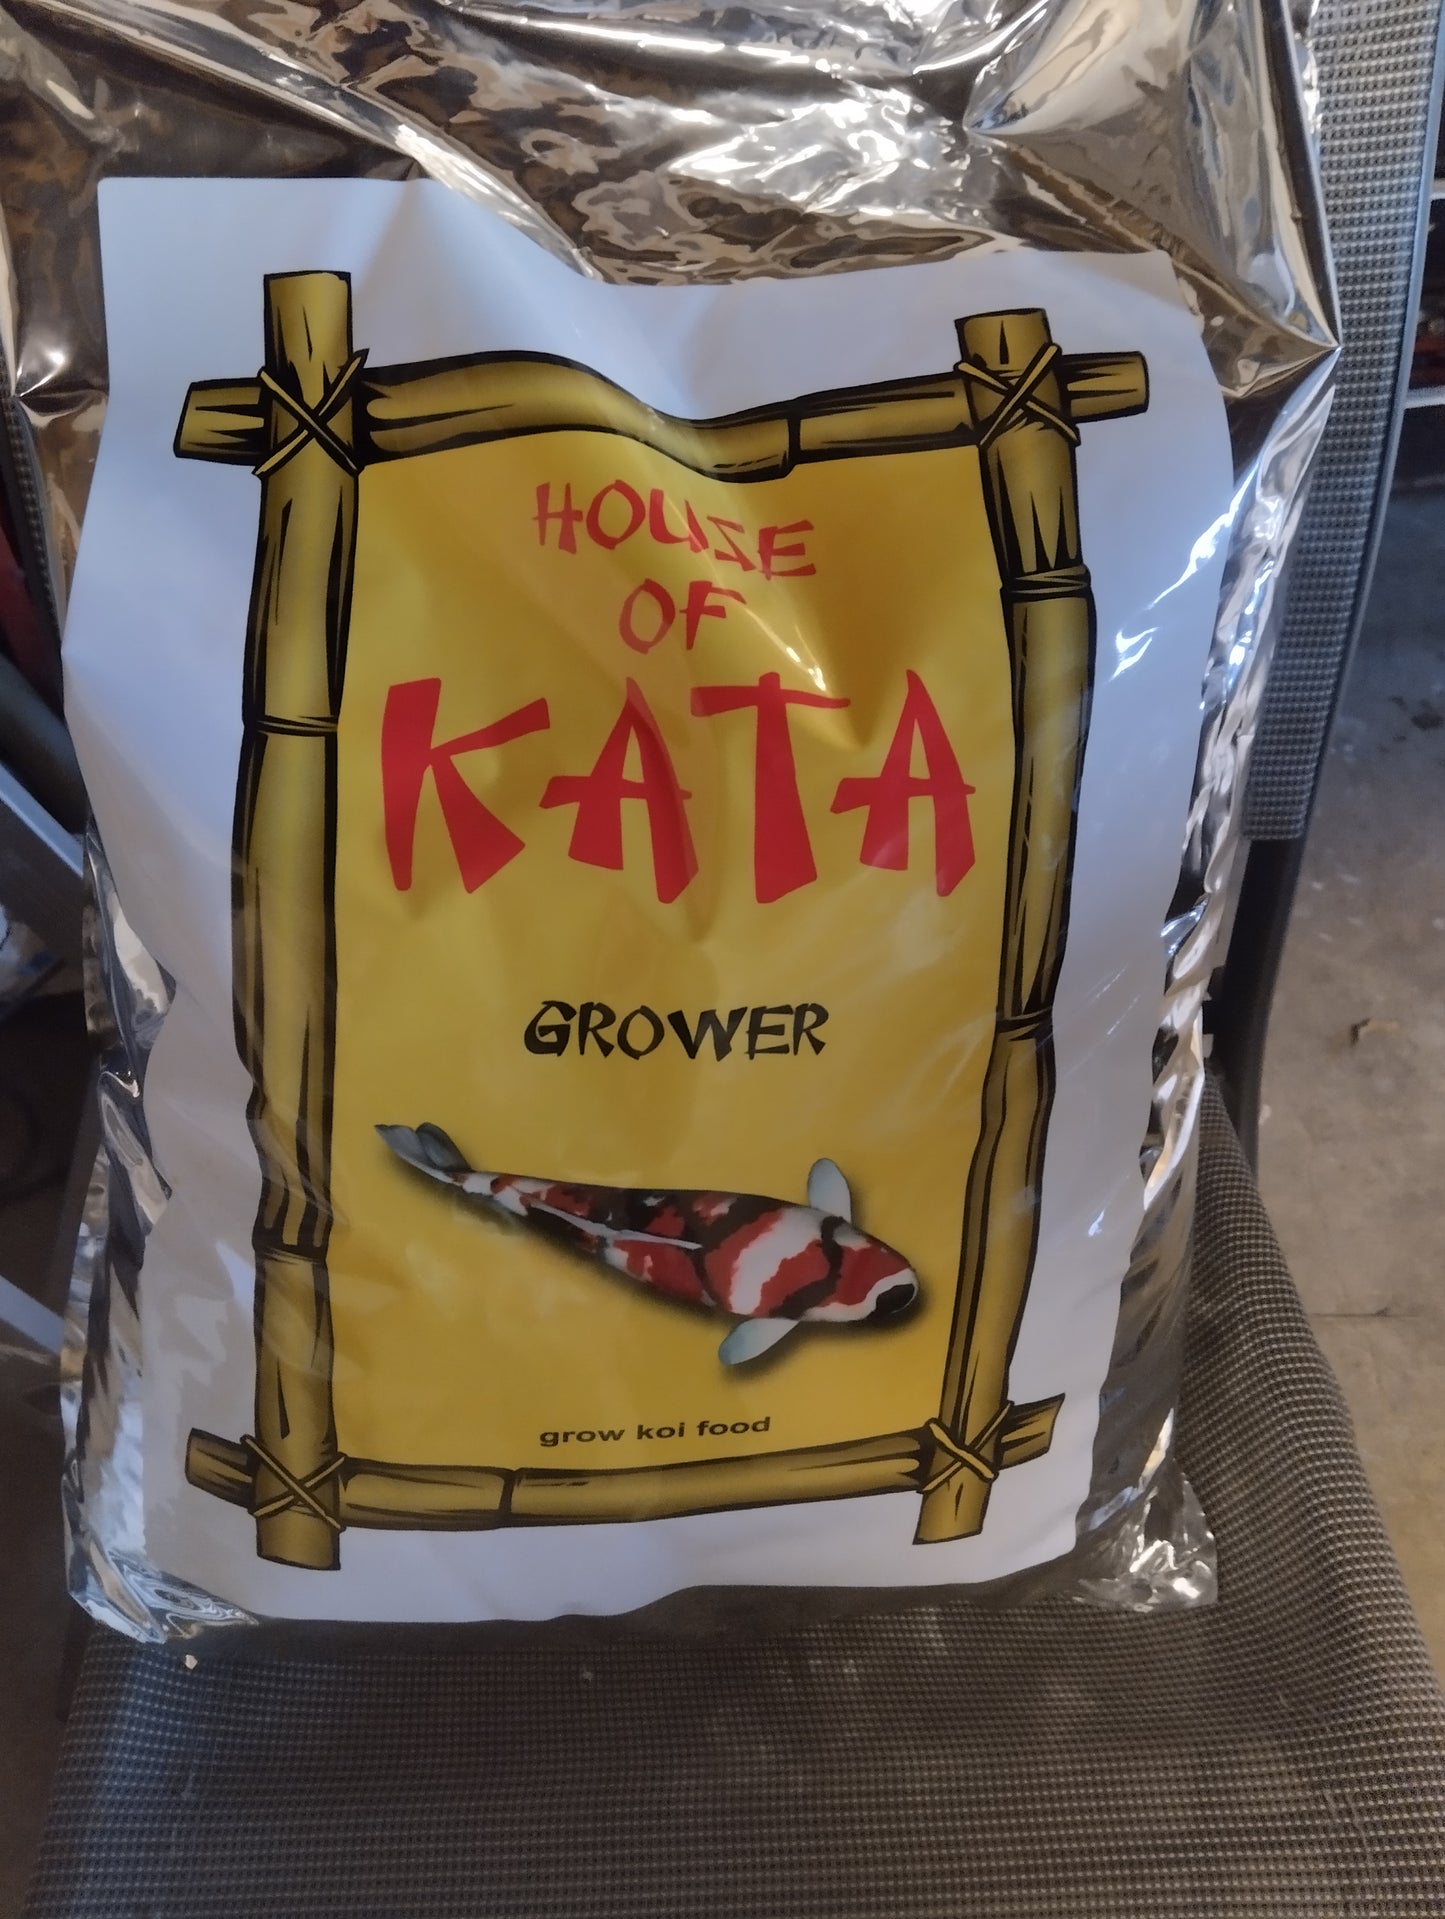 House of kata grower 10 kg